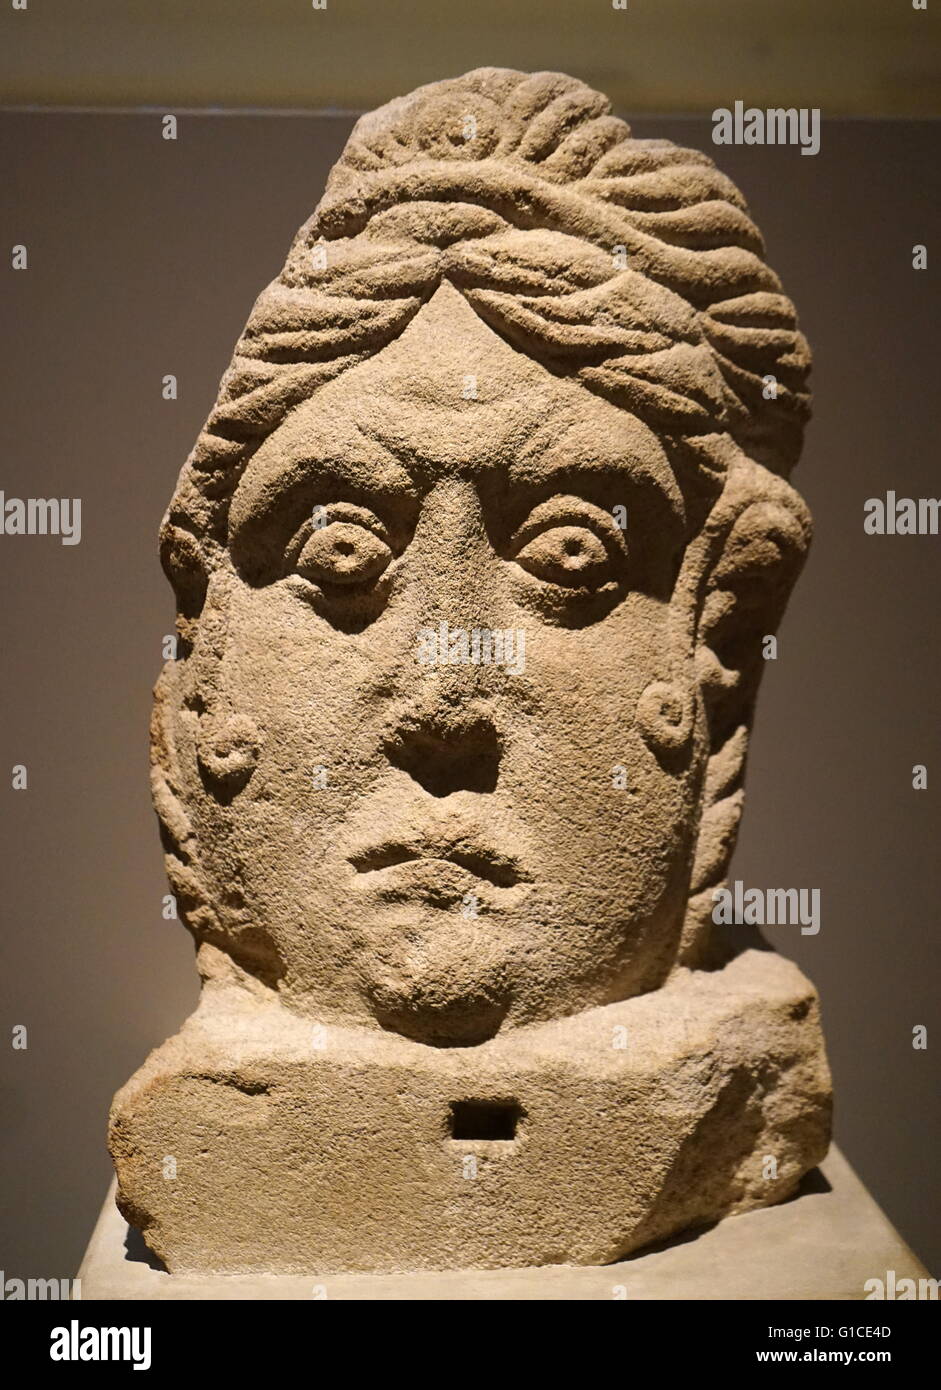 Limestone head from Towcester, Northamptonshire. Stock Photo